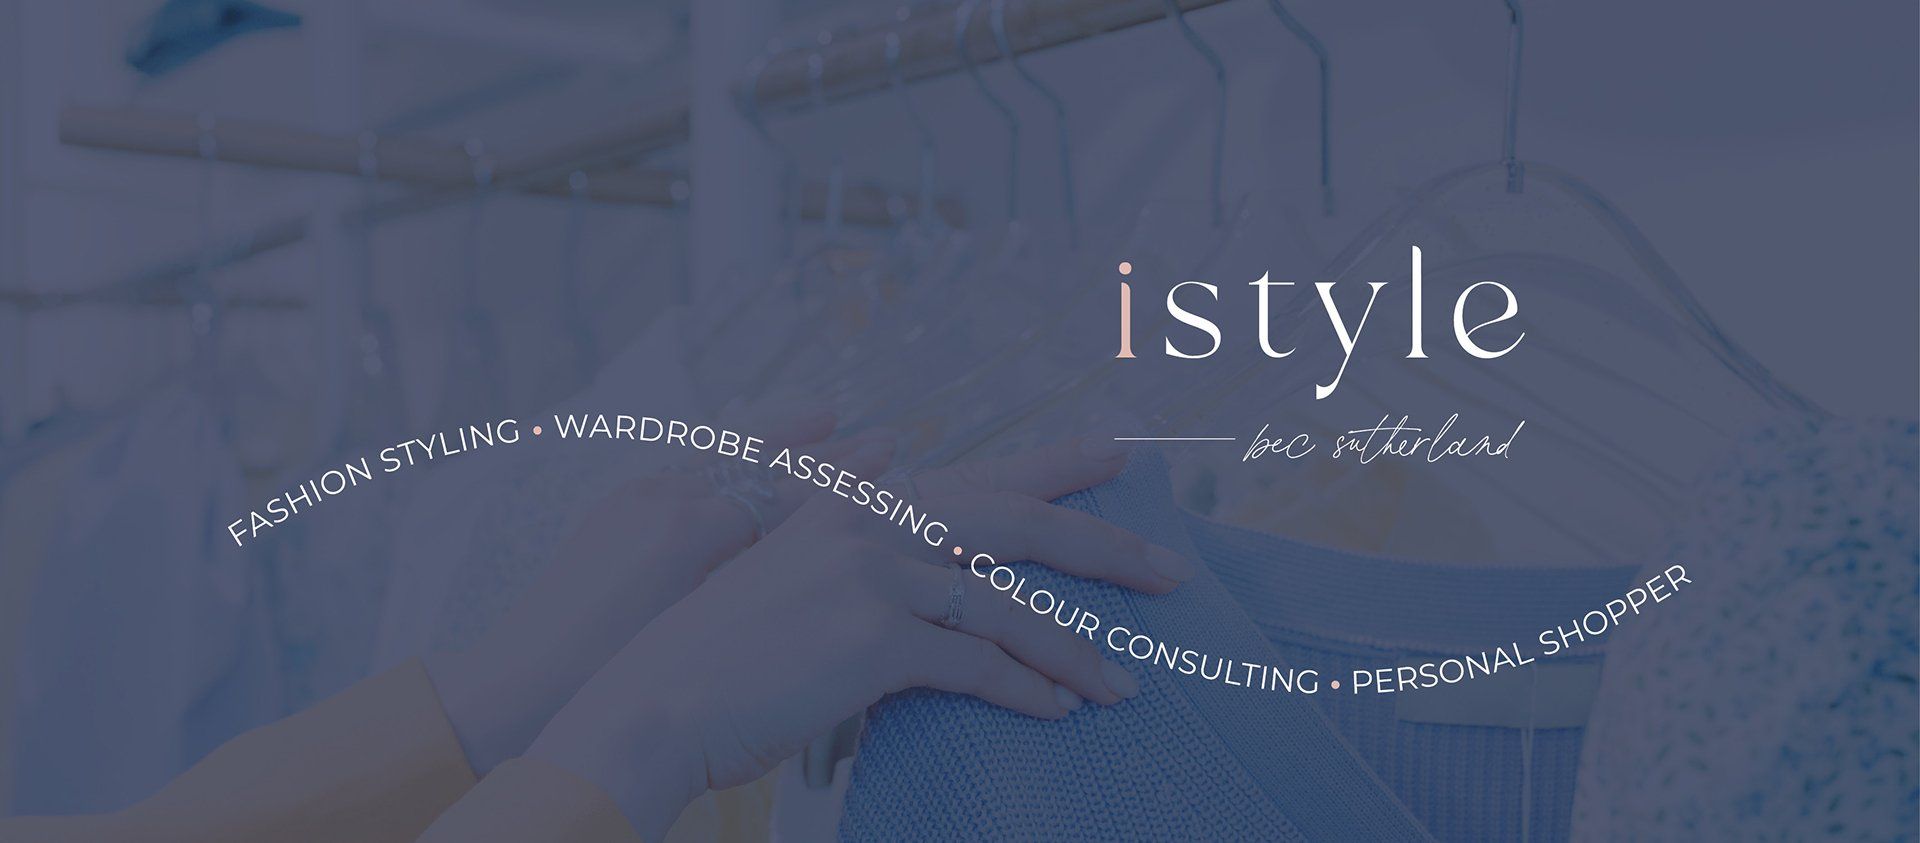 iStyle branding by Vanilla Hayes Ltd in Blenheim, New Zealand